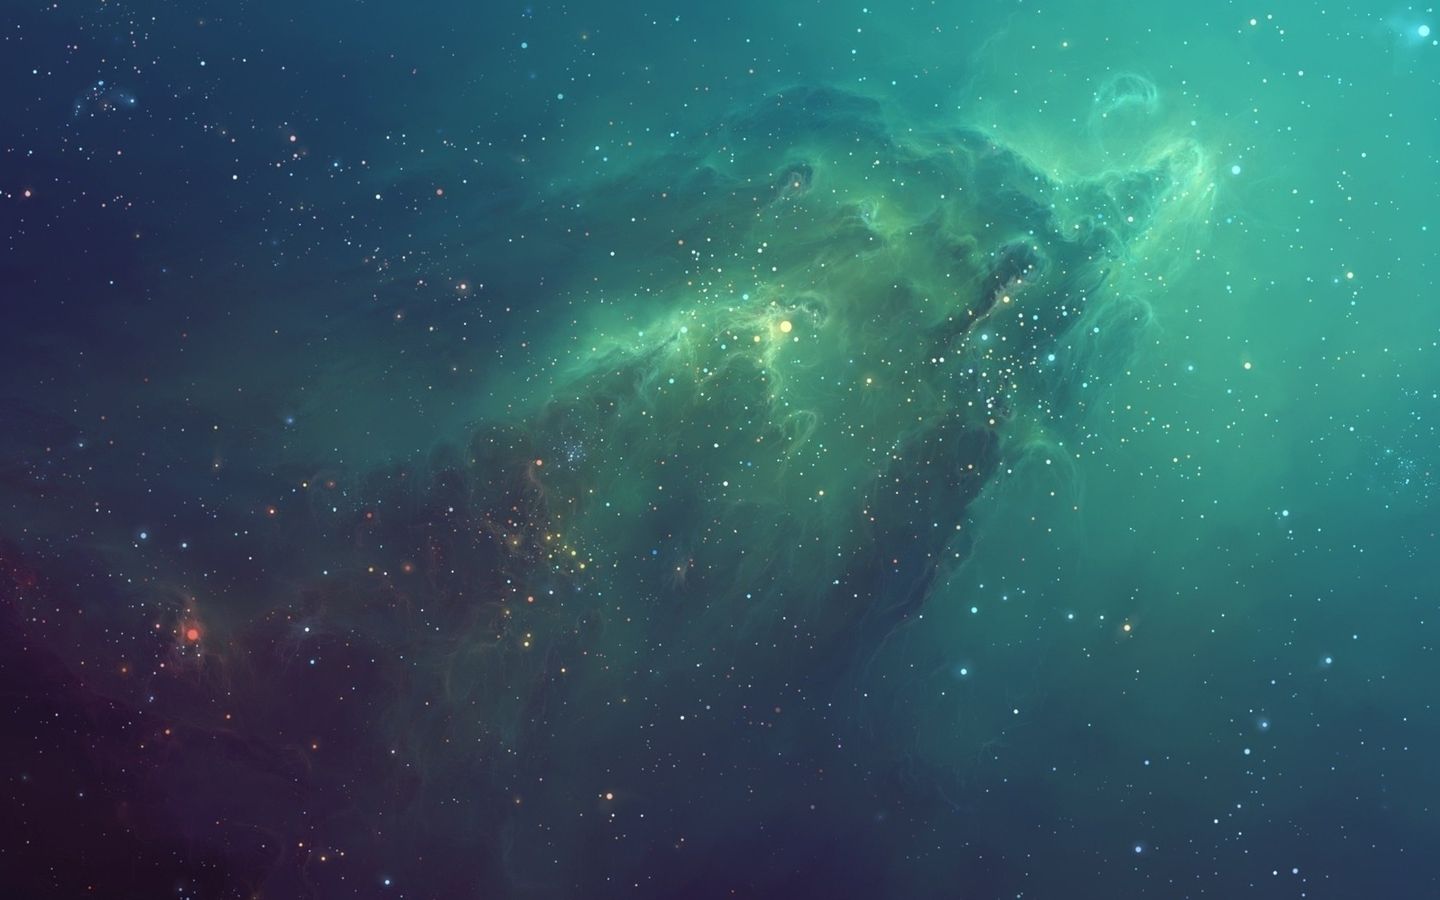 Galactic Nebula Mac Wallpaper Download | Free Mac Wallpapers Download